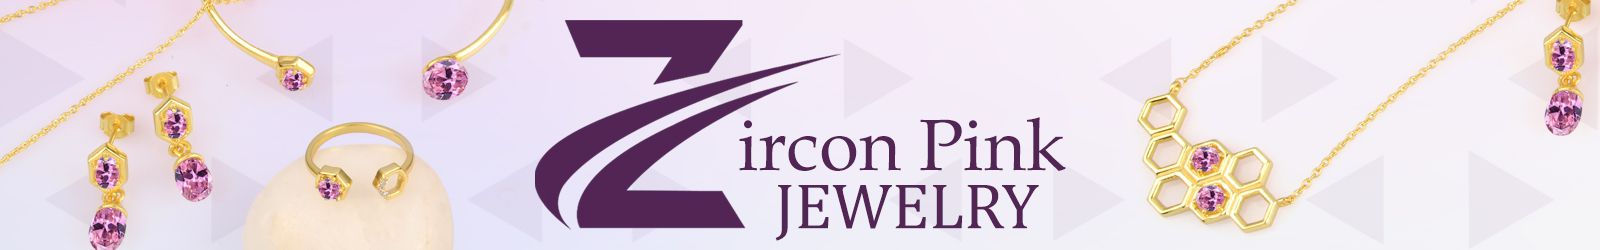 Silver Zircon Pink Jewelry Wholesale Supplier